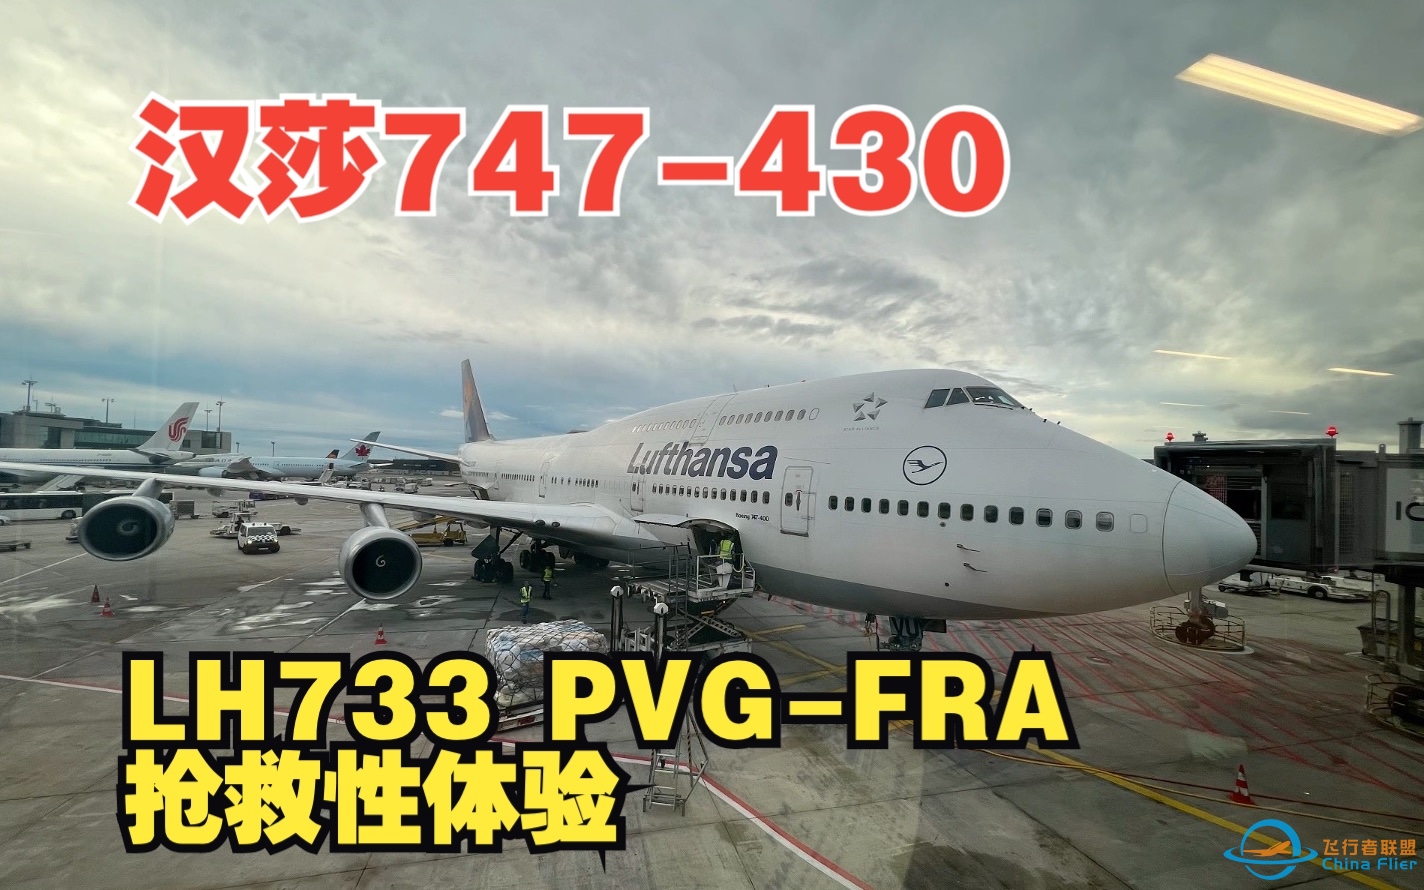 【Flight Vlog】抢救性汉莎747-400飞行体验 LH733-LH942 PVG-FRA-MAN-7398 